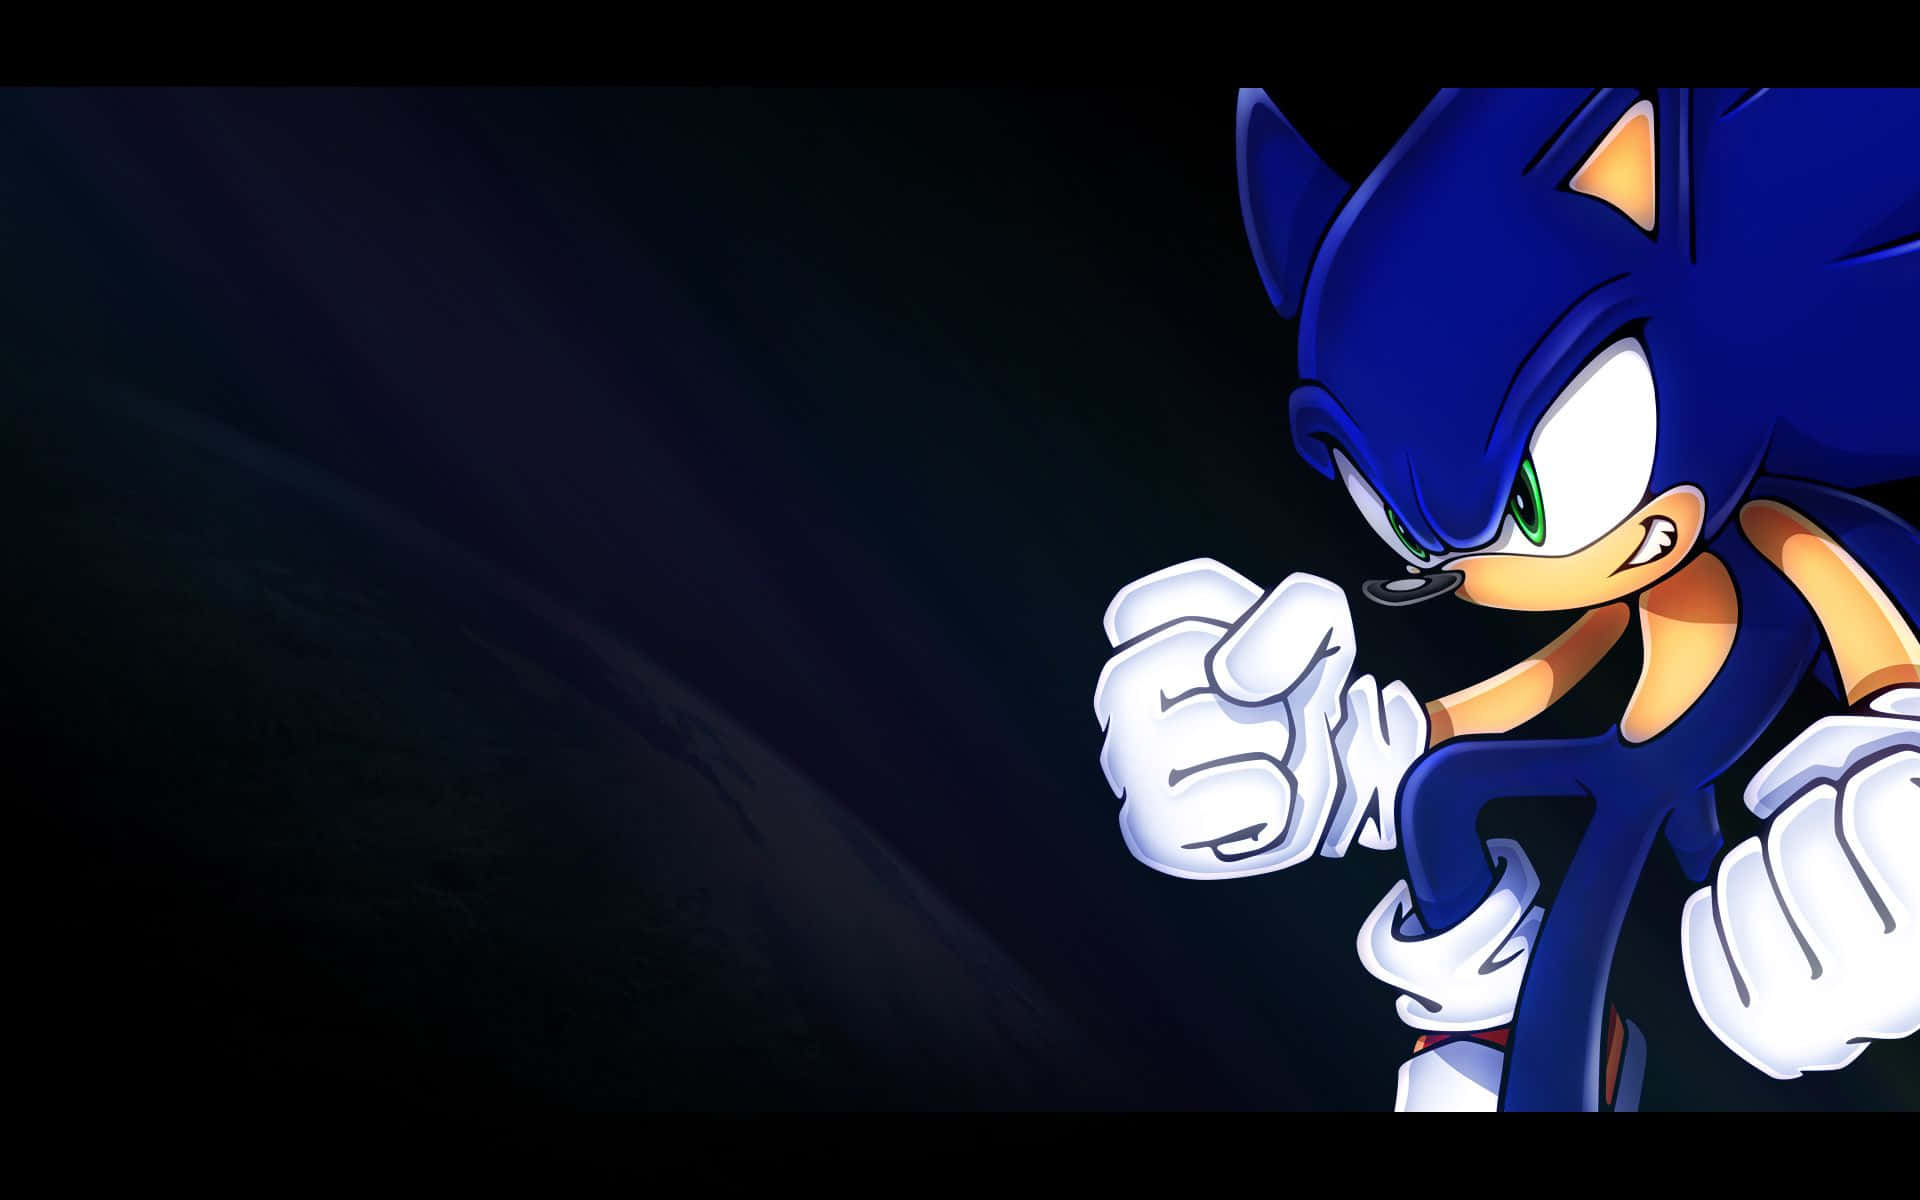 "Sonic the Hedgehog Blazes Through the Levels of Sonic 4k in Stunning 4k Resolution" Wallpaper